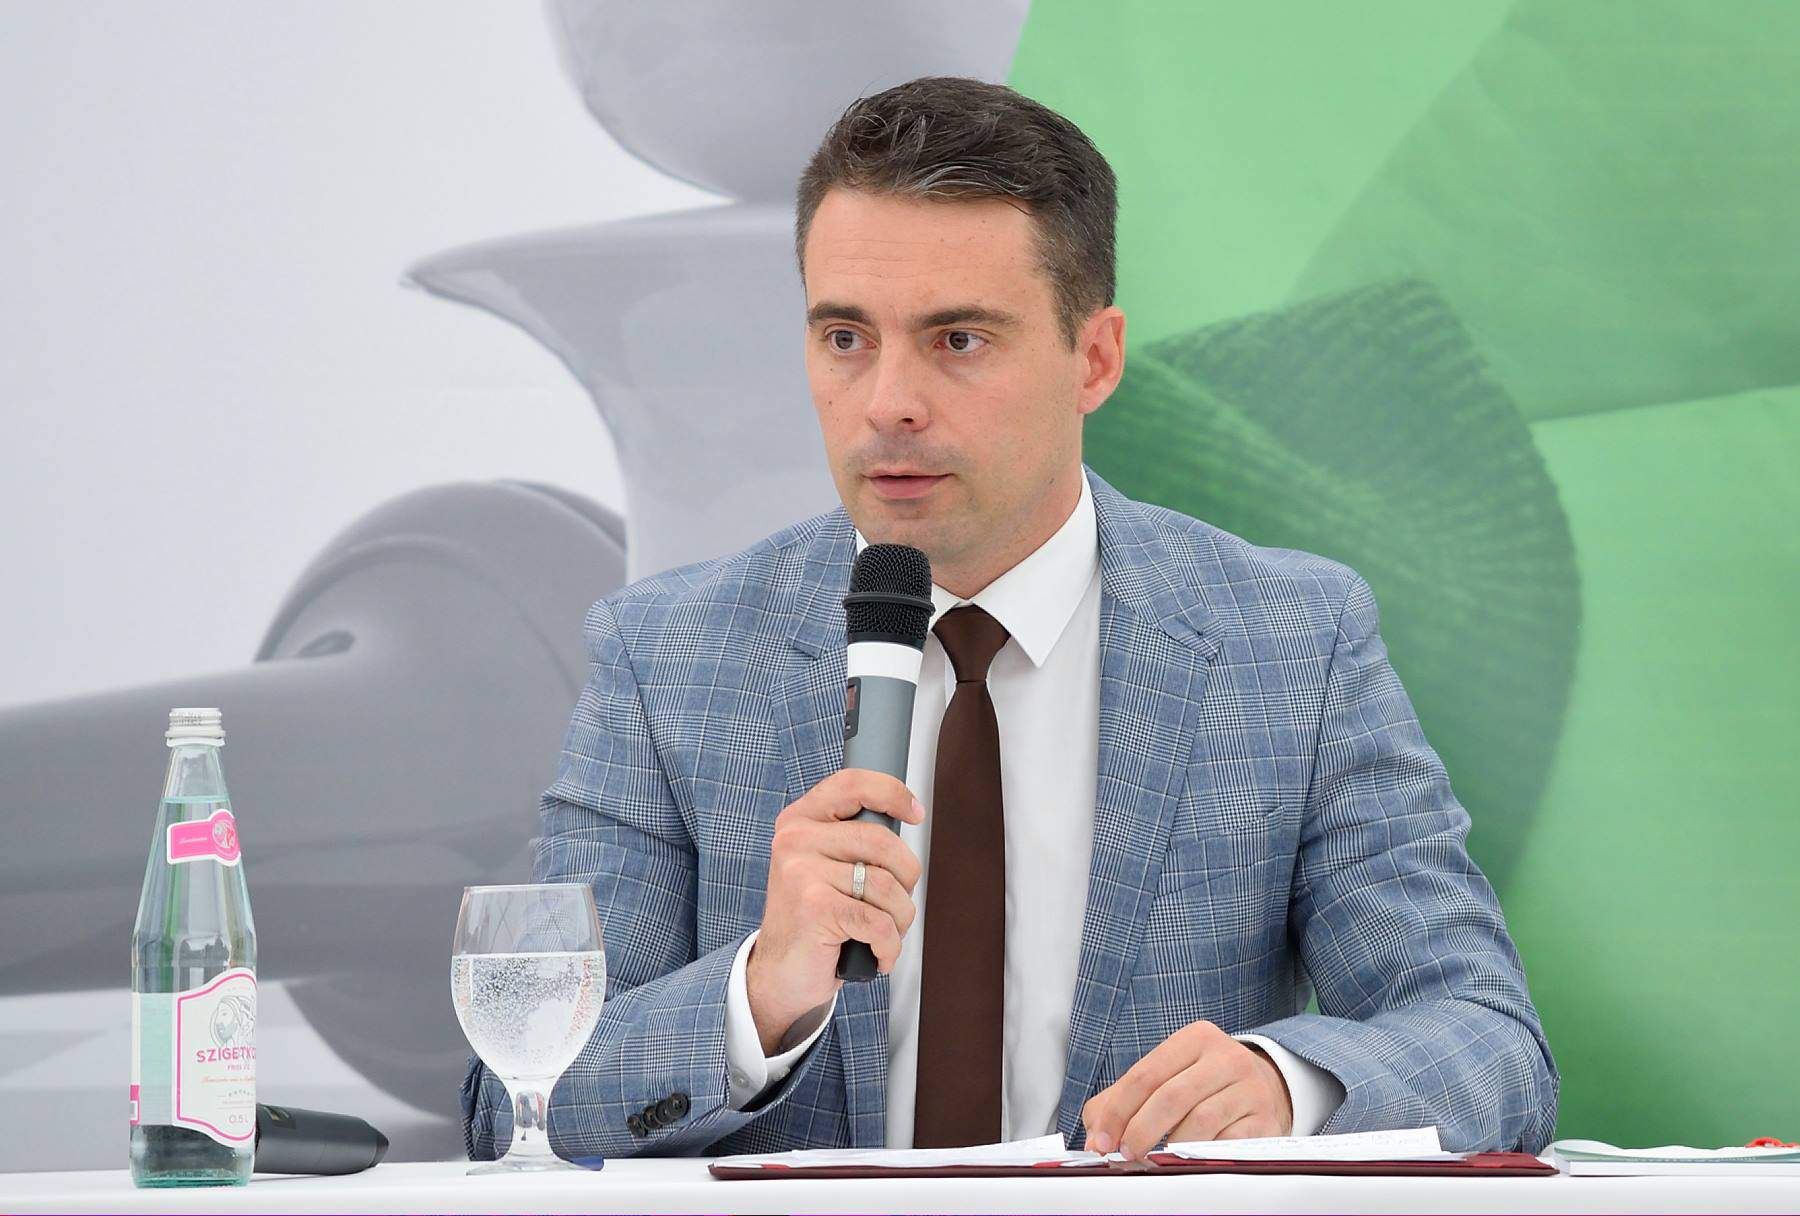 Autonomy for ethnic Hungarian communities is common regional interest, says Jobbik leader Vona - Daily News